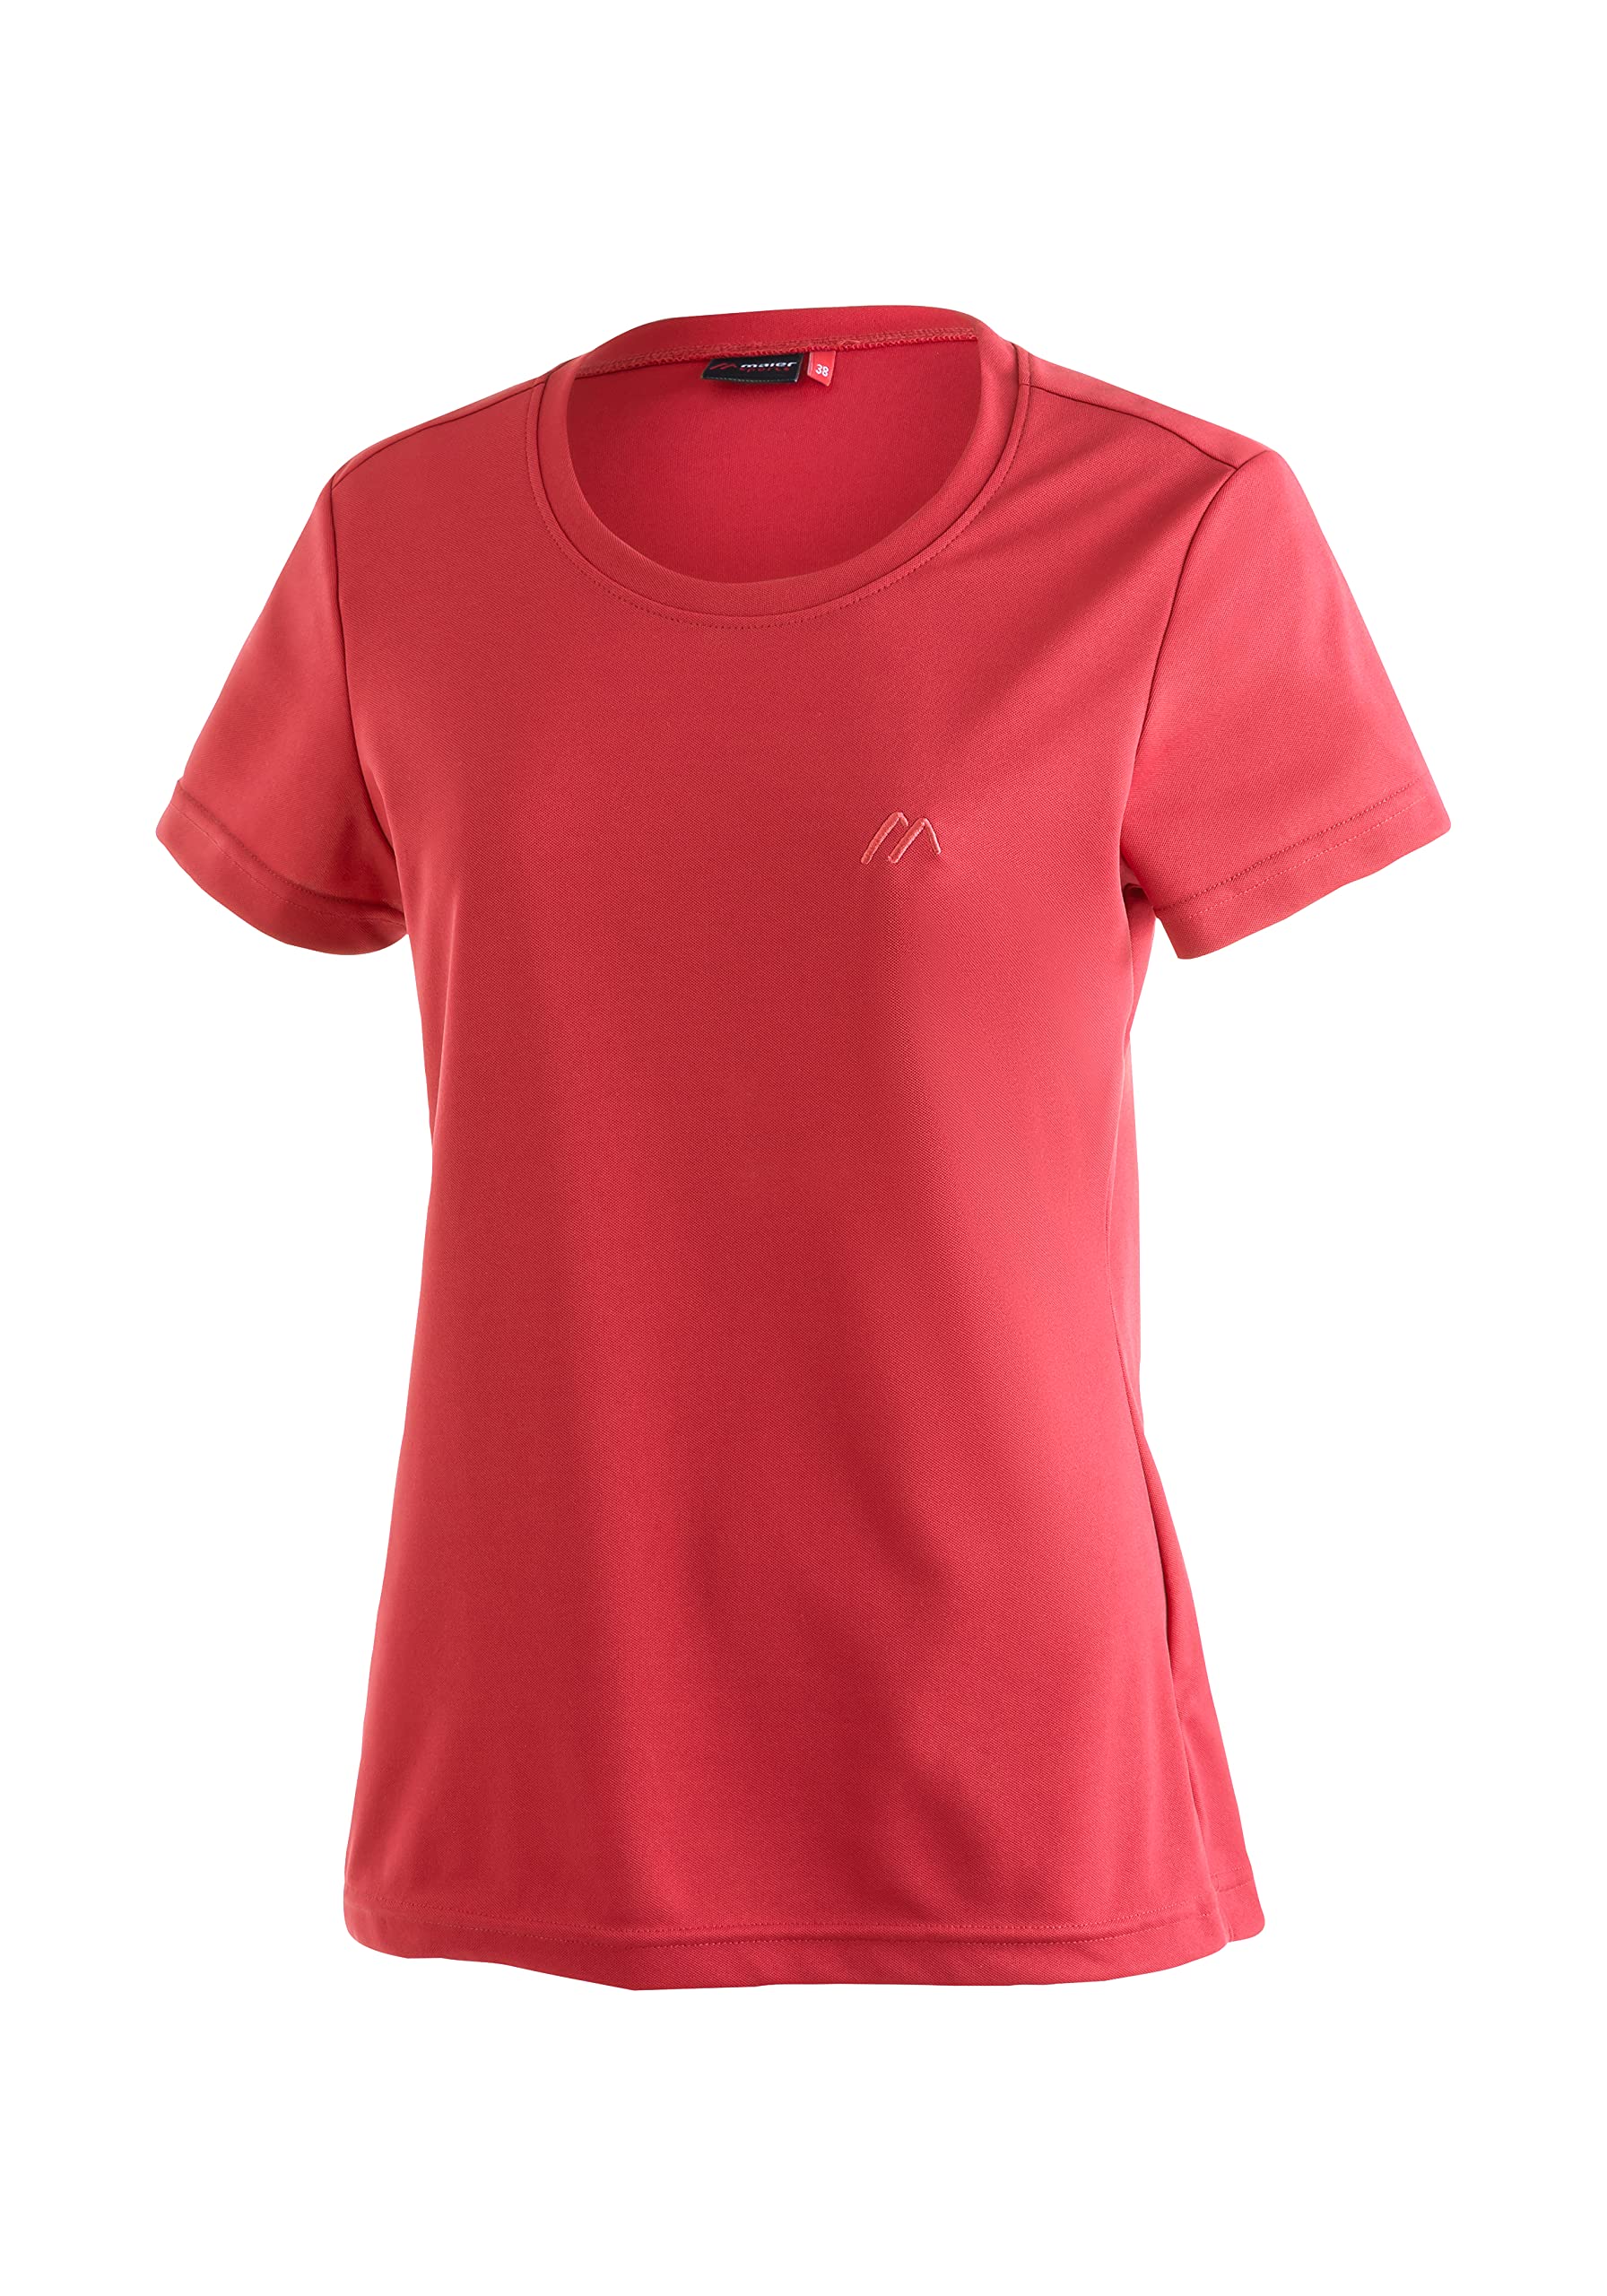 Maier Sports Damen T-Shirt Waltraud, einfarbiges Kurzarm Piqué-Shirt, Watermelon Red, 38